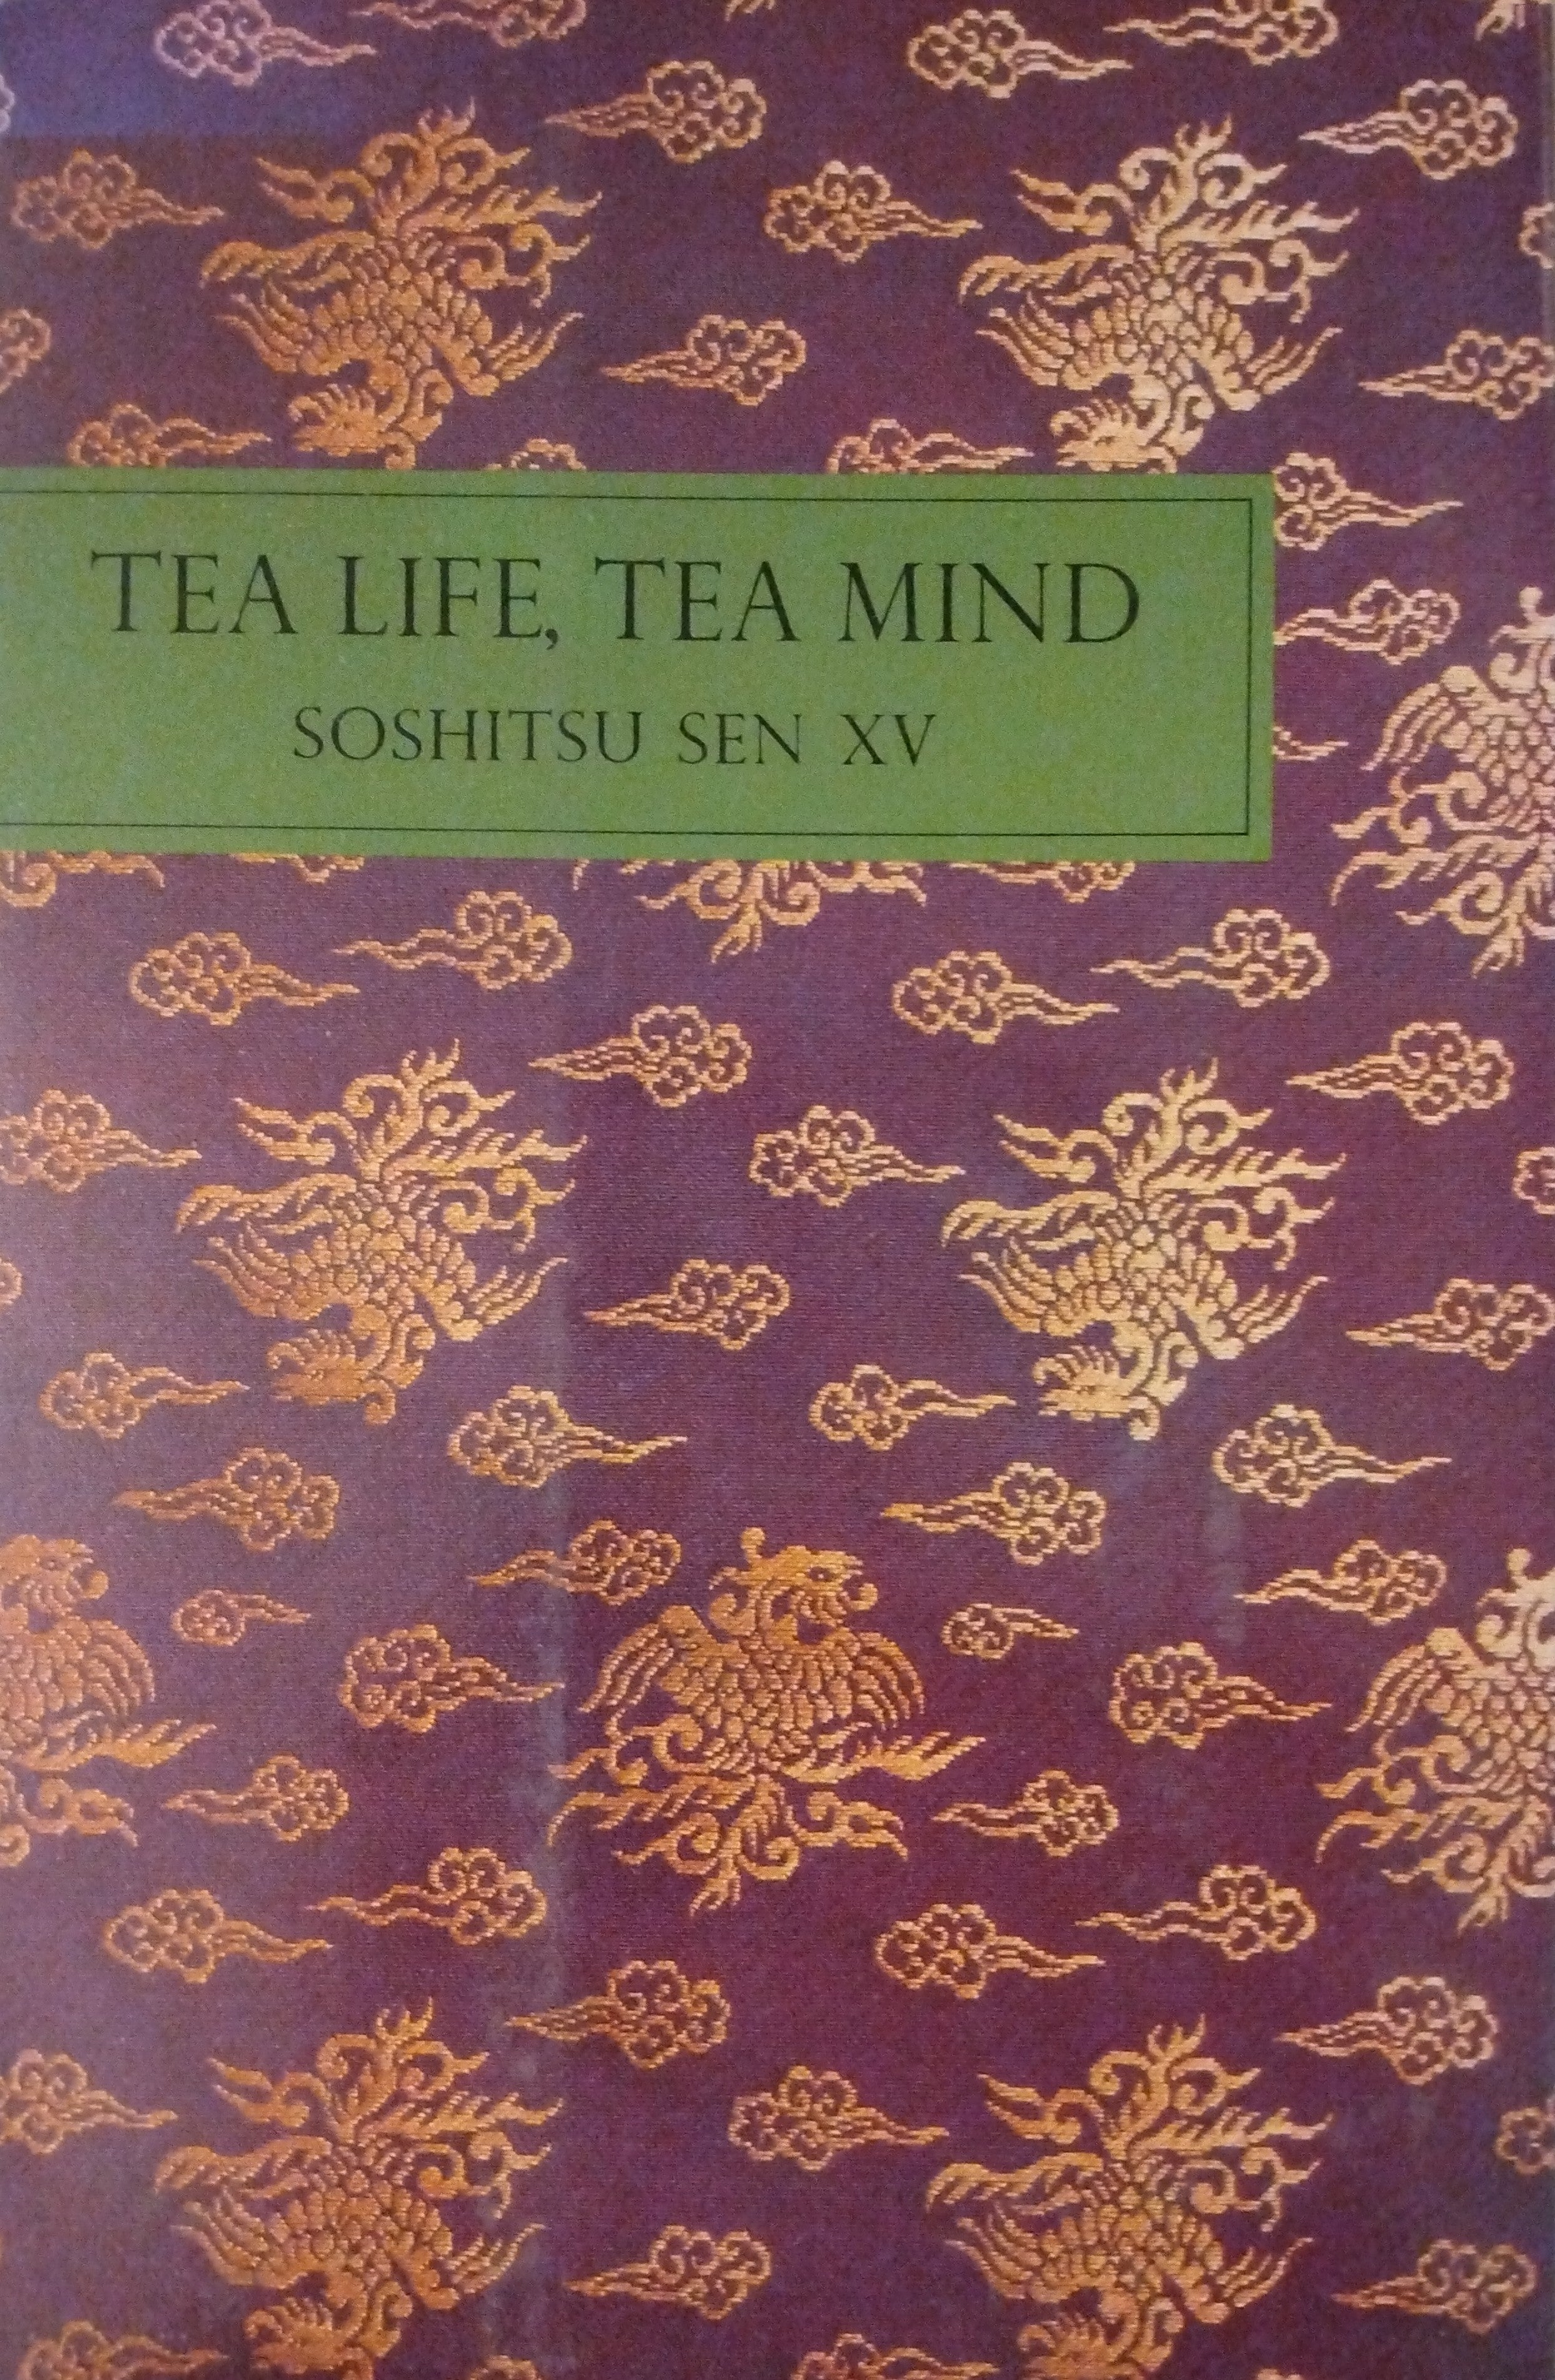 "Tea Life, Tea Mind", by Soshitsu Sen XV; Thiel Collection